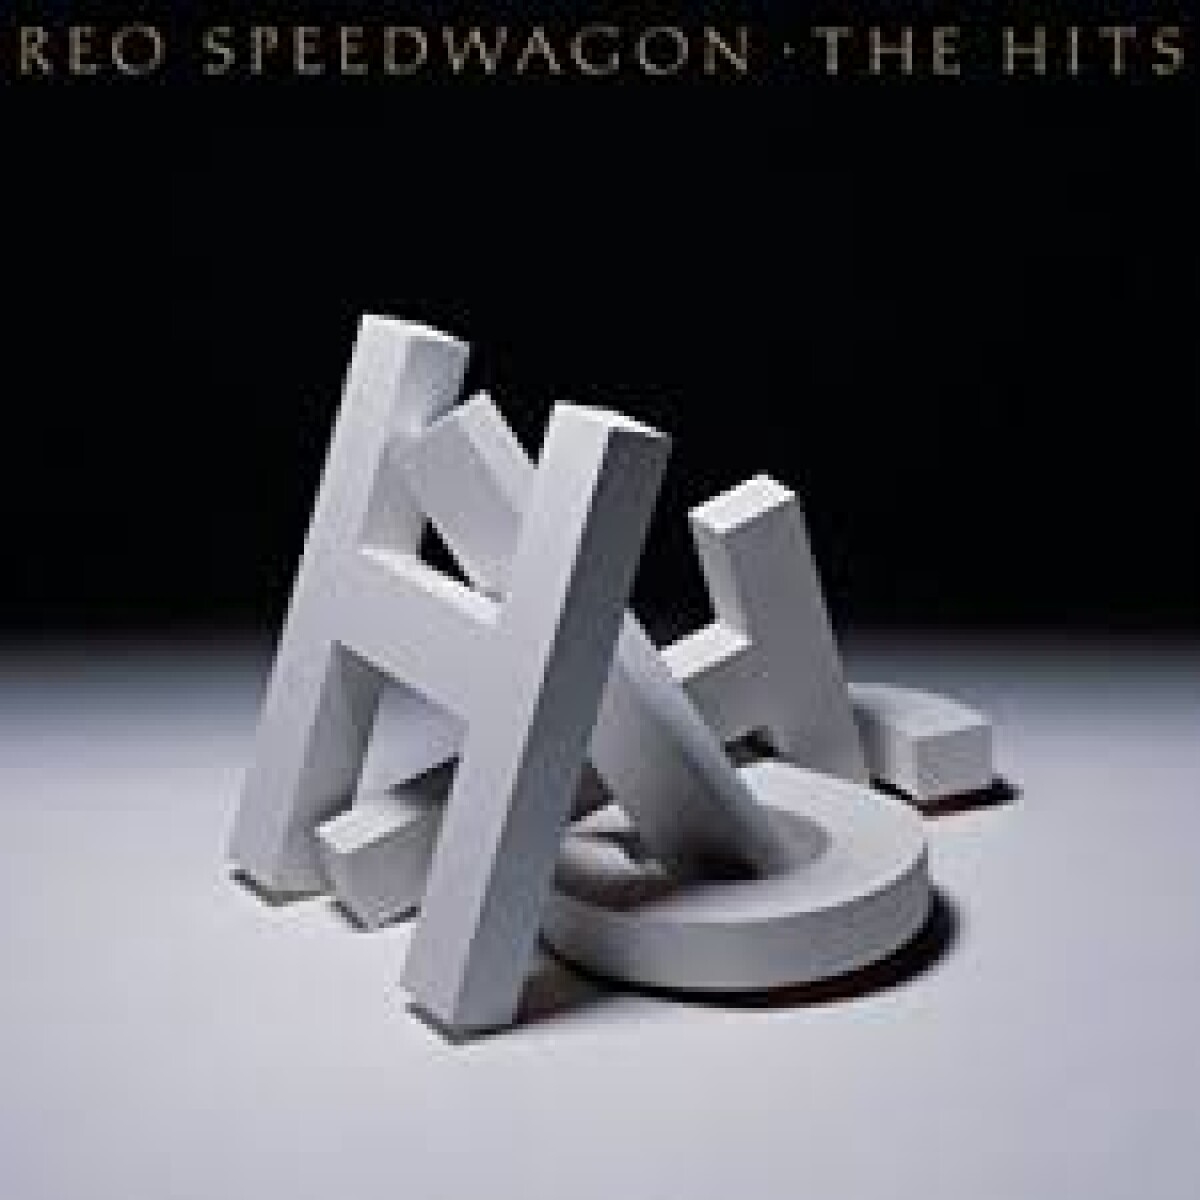 Reo Speedwagon-hits - Vinilo 